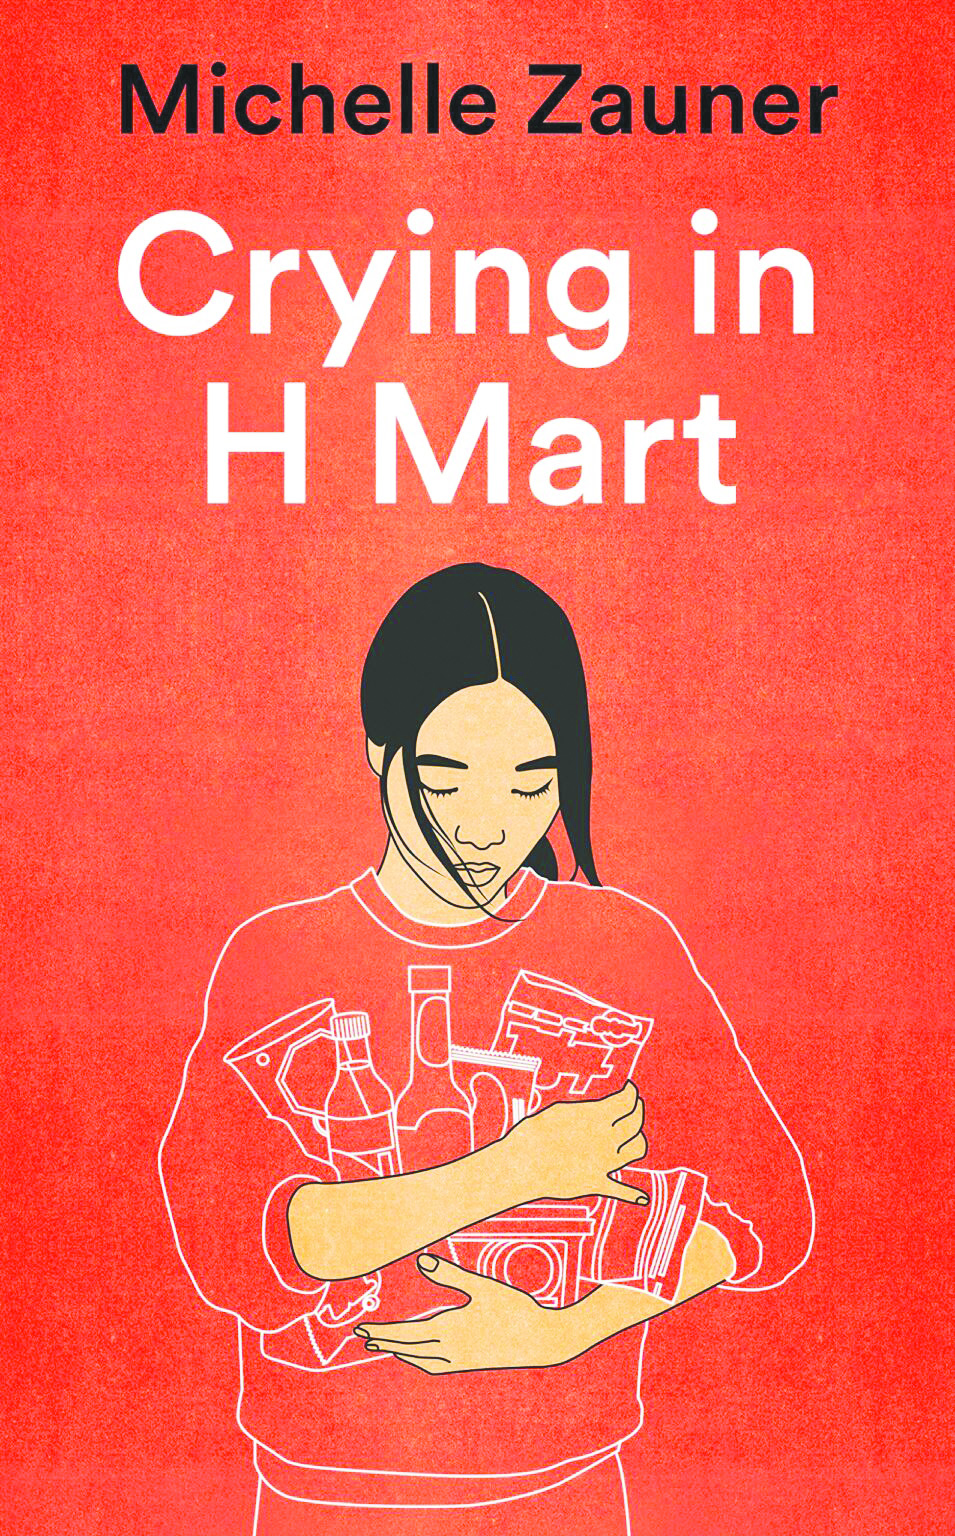 “‘H마트에서 울기’ 공감해보세요”...시애틀타임스, 미셸 조너의 베스트셀러 회고록 재조명